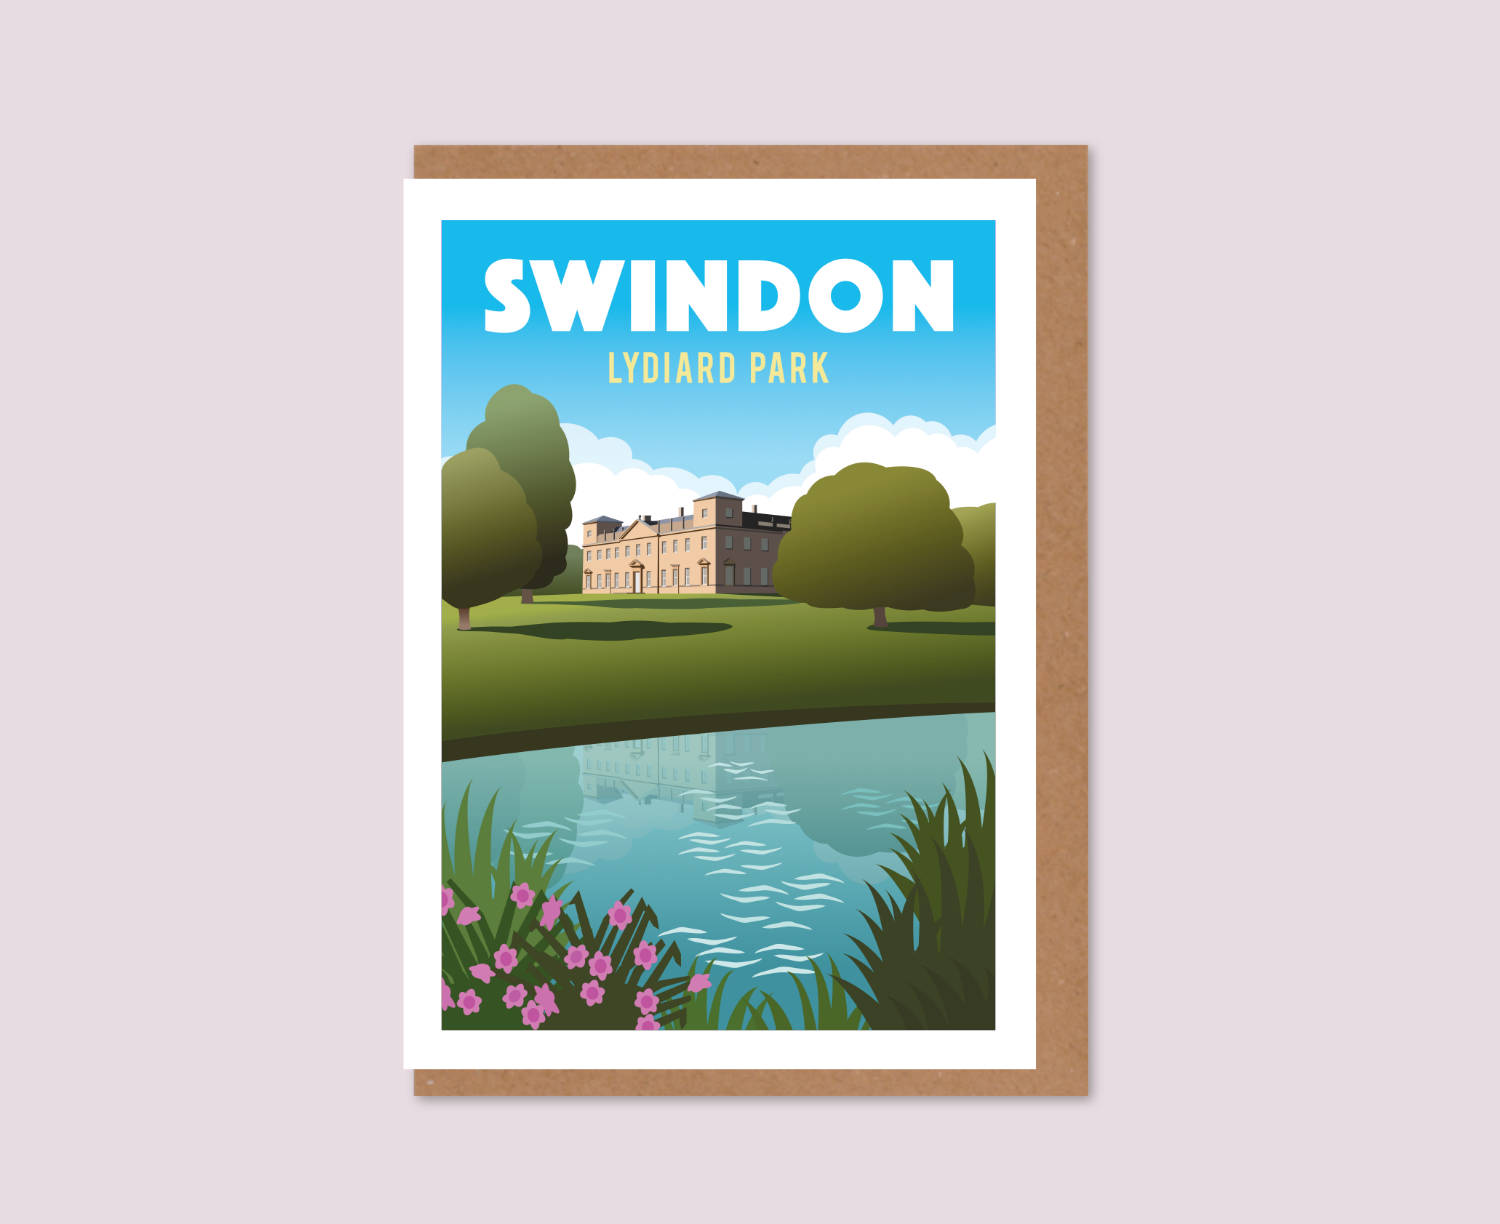 Swindon Lydiard Park greeting card design